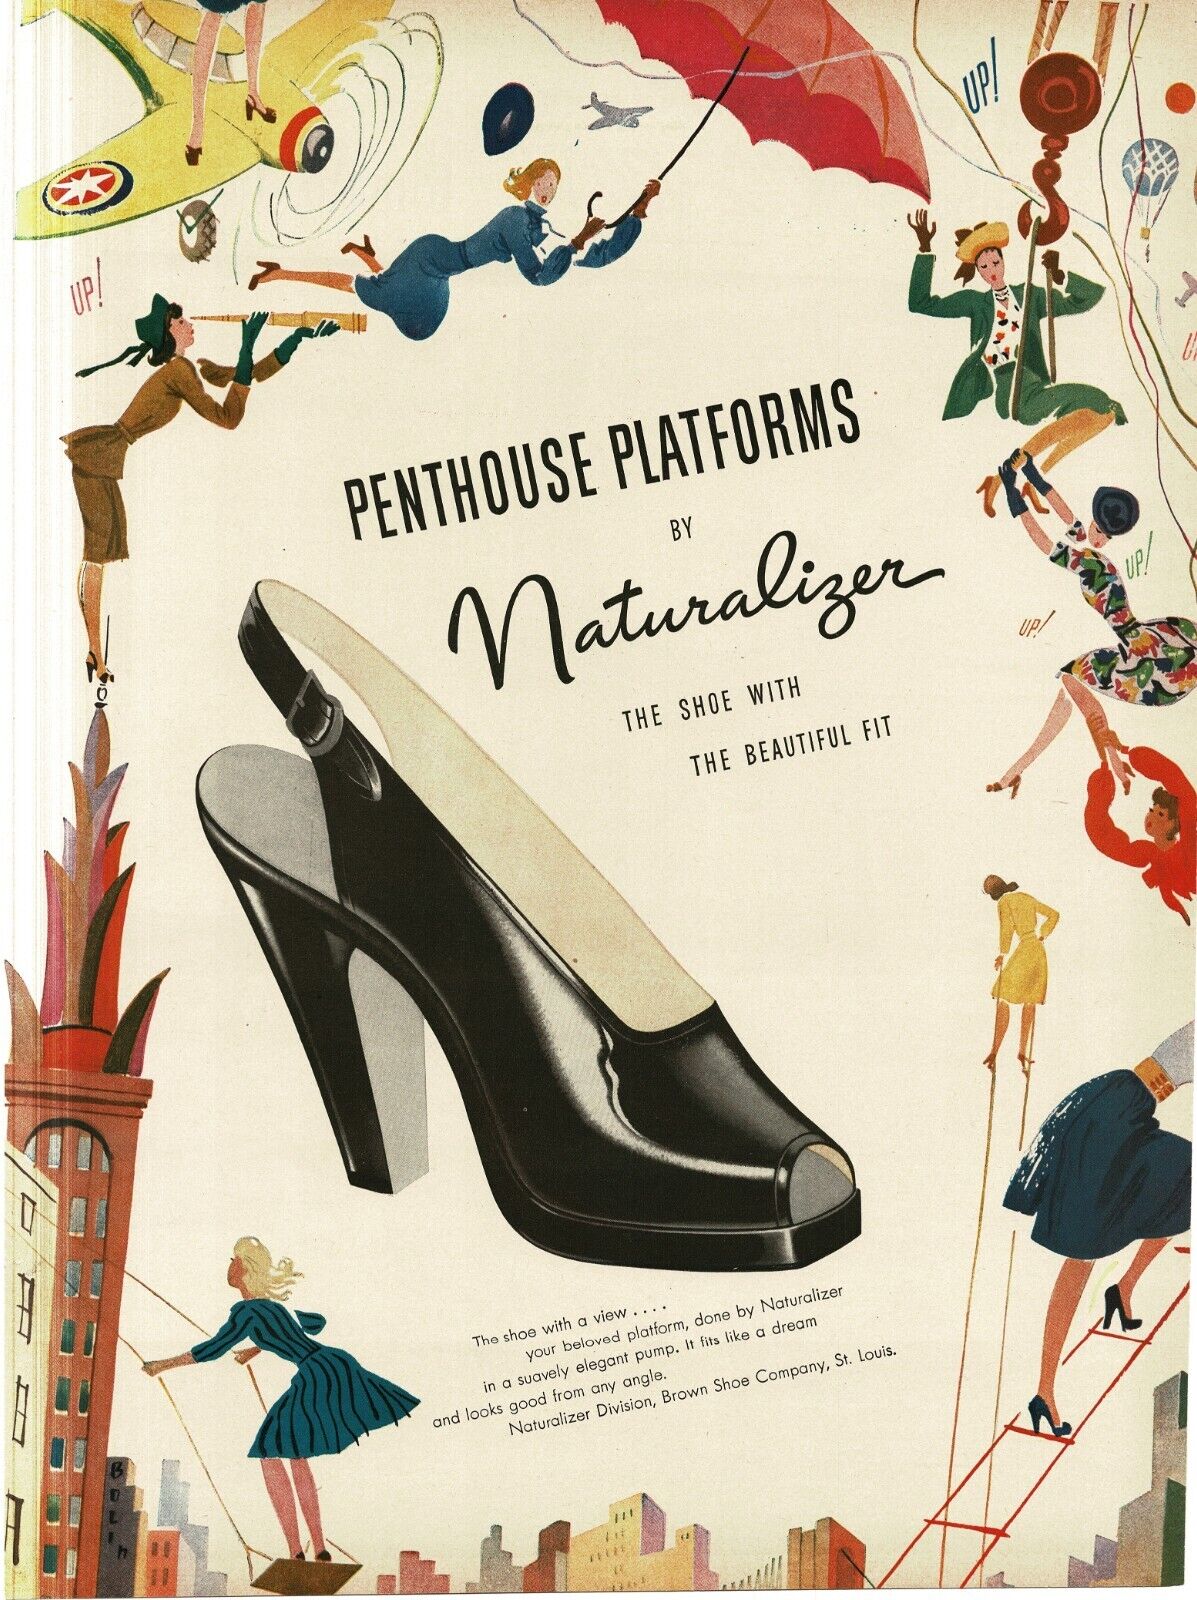 1946 Naturalizer Penthouse Platforms Black High-Heel Women\'s Shoes art Print Ad